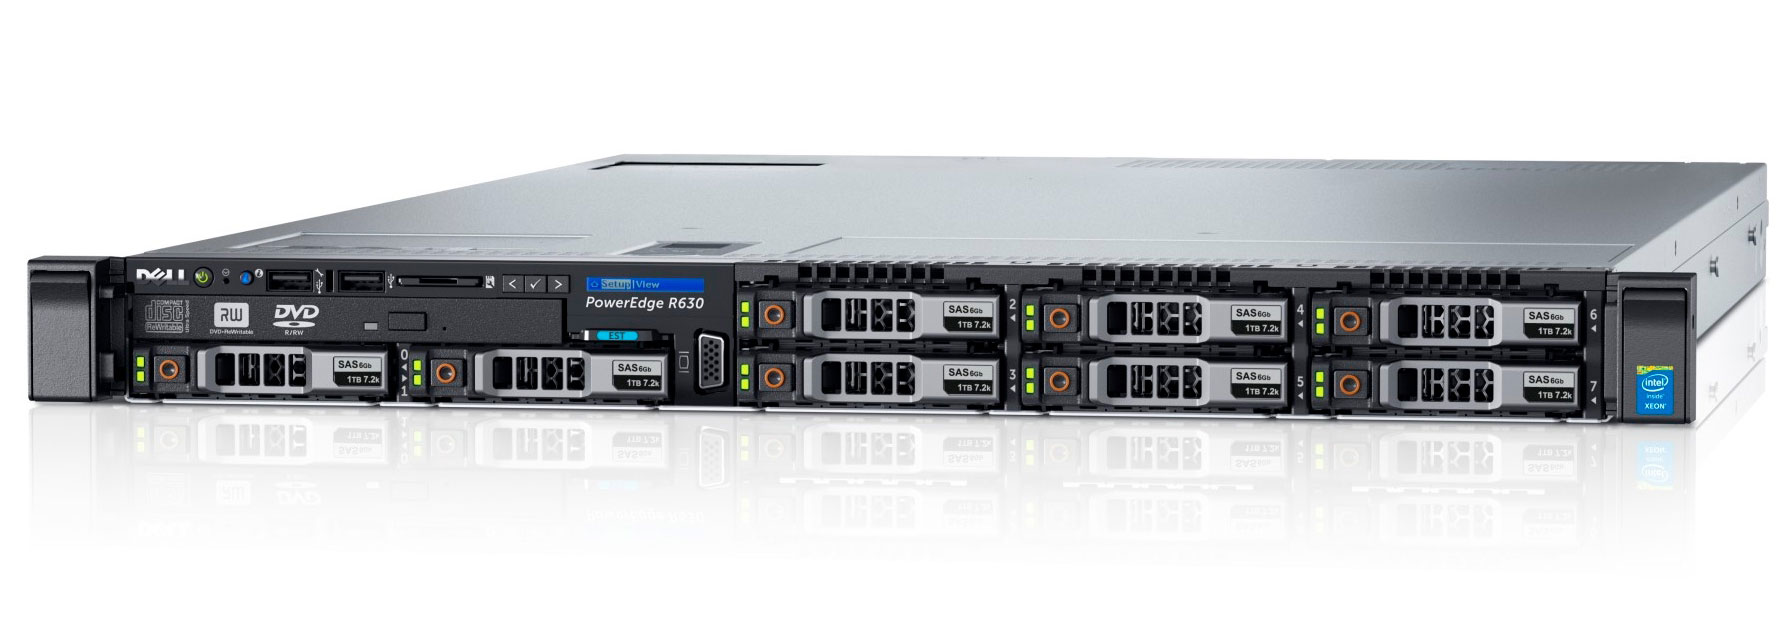 Подробное фото Сервер DELL PowerEdge R630 Xeon 2x E5-2699v3 128Gb 2133P DDR4 8x noHDD 2.5", SAS RAID Perc H730, 1024Mb, DVD, 2*PSU